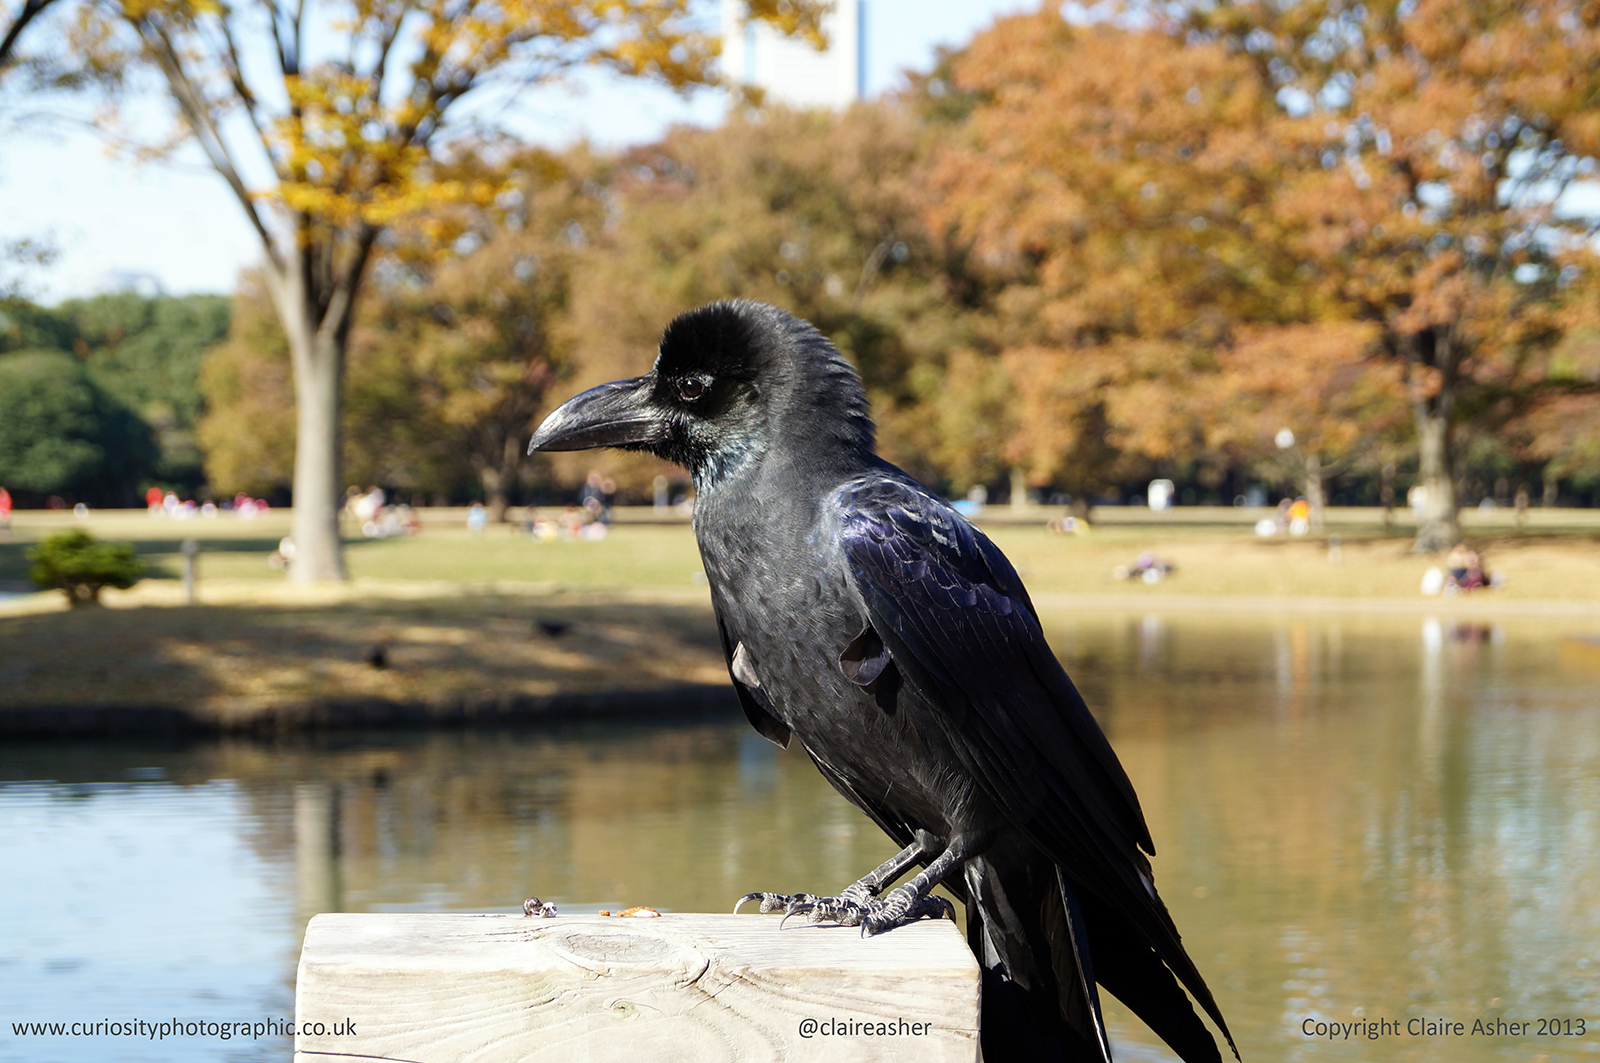 A Jungle Crow (Corvus macrorhynchos) photographed in Japan in 2013